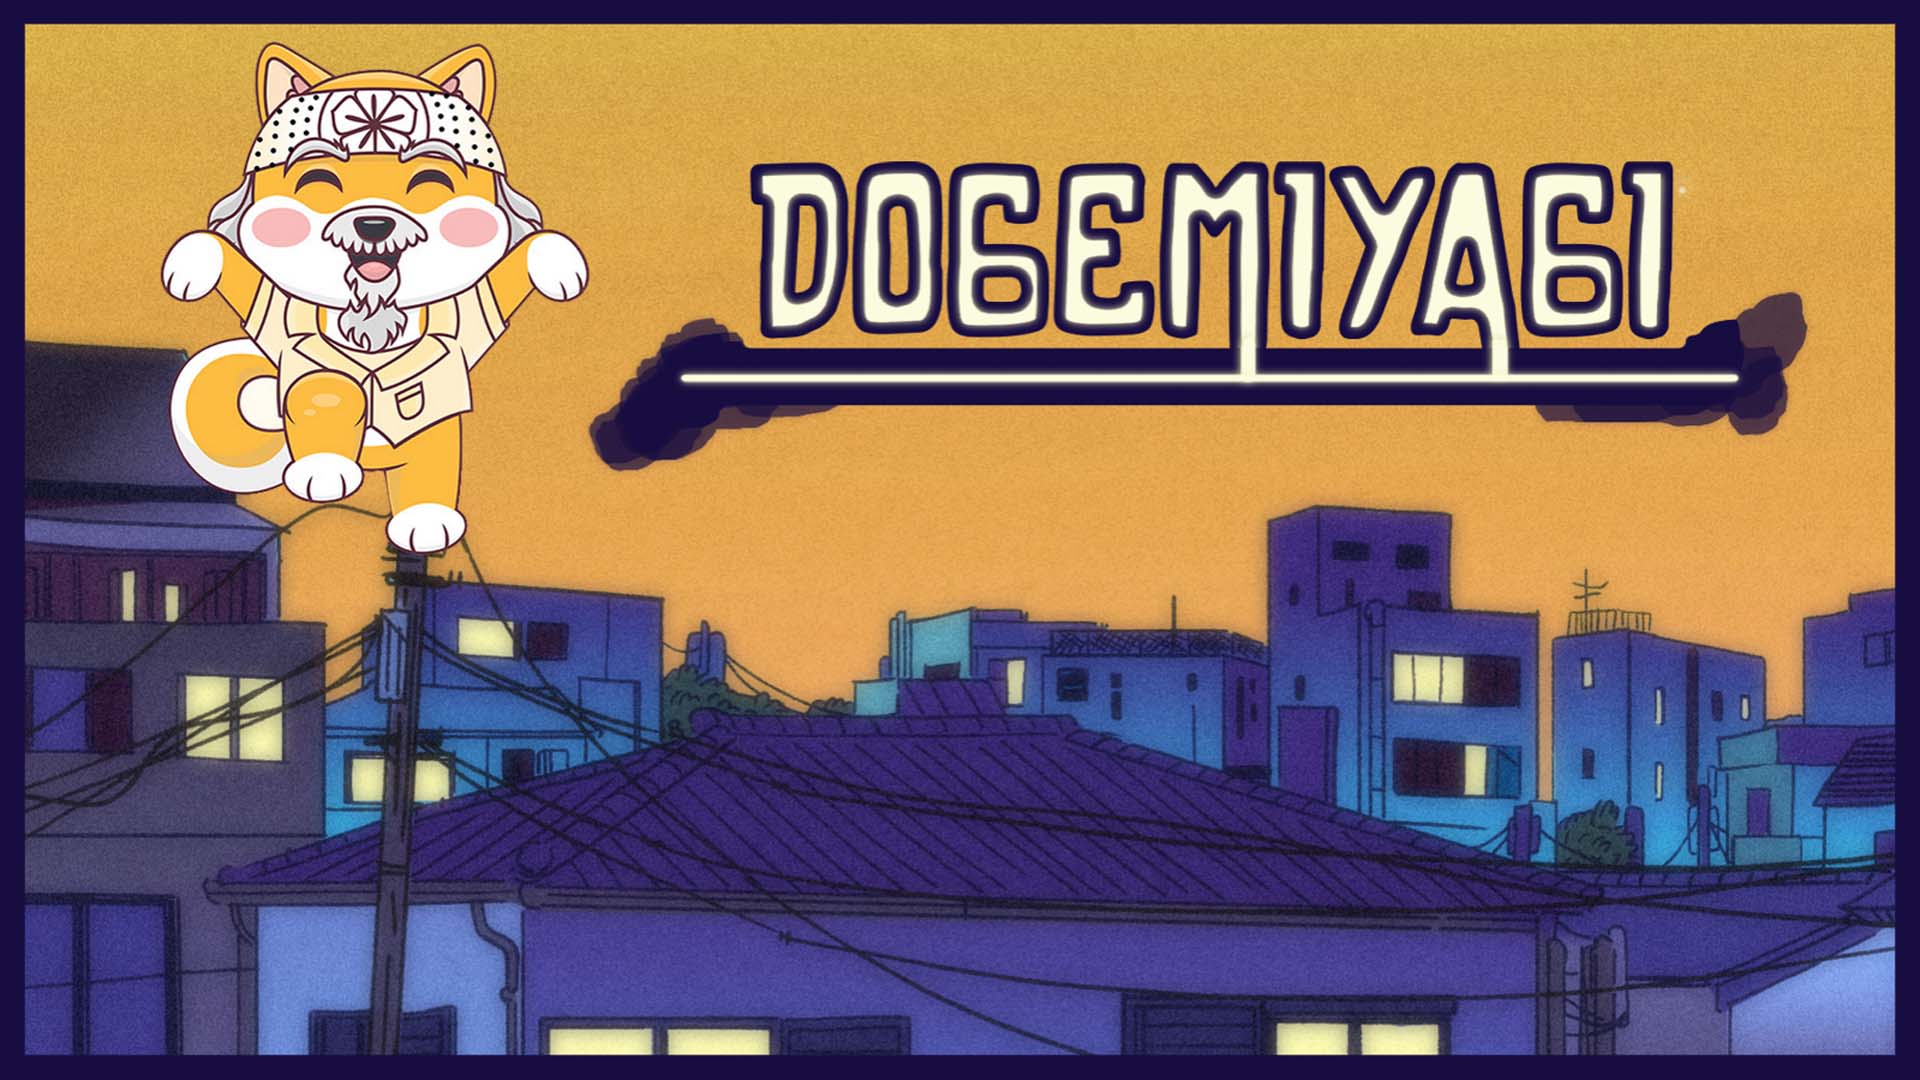 Decentralised Darlings – How Solana, Shiba Inu, and DogeMiyagi Wield the Power of DeFi